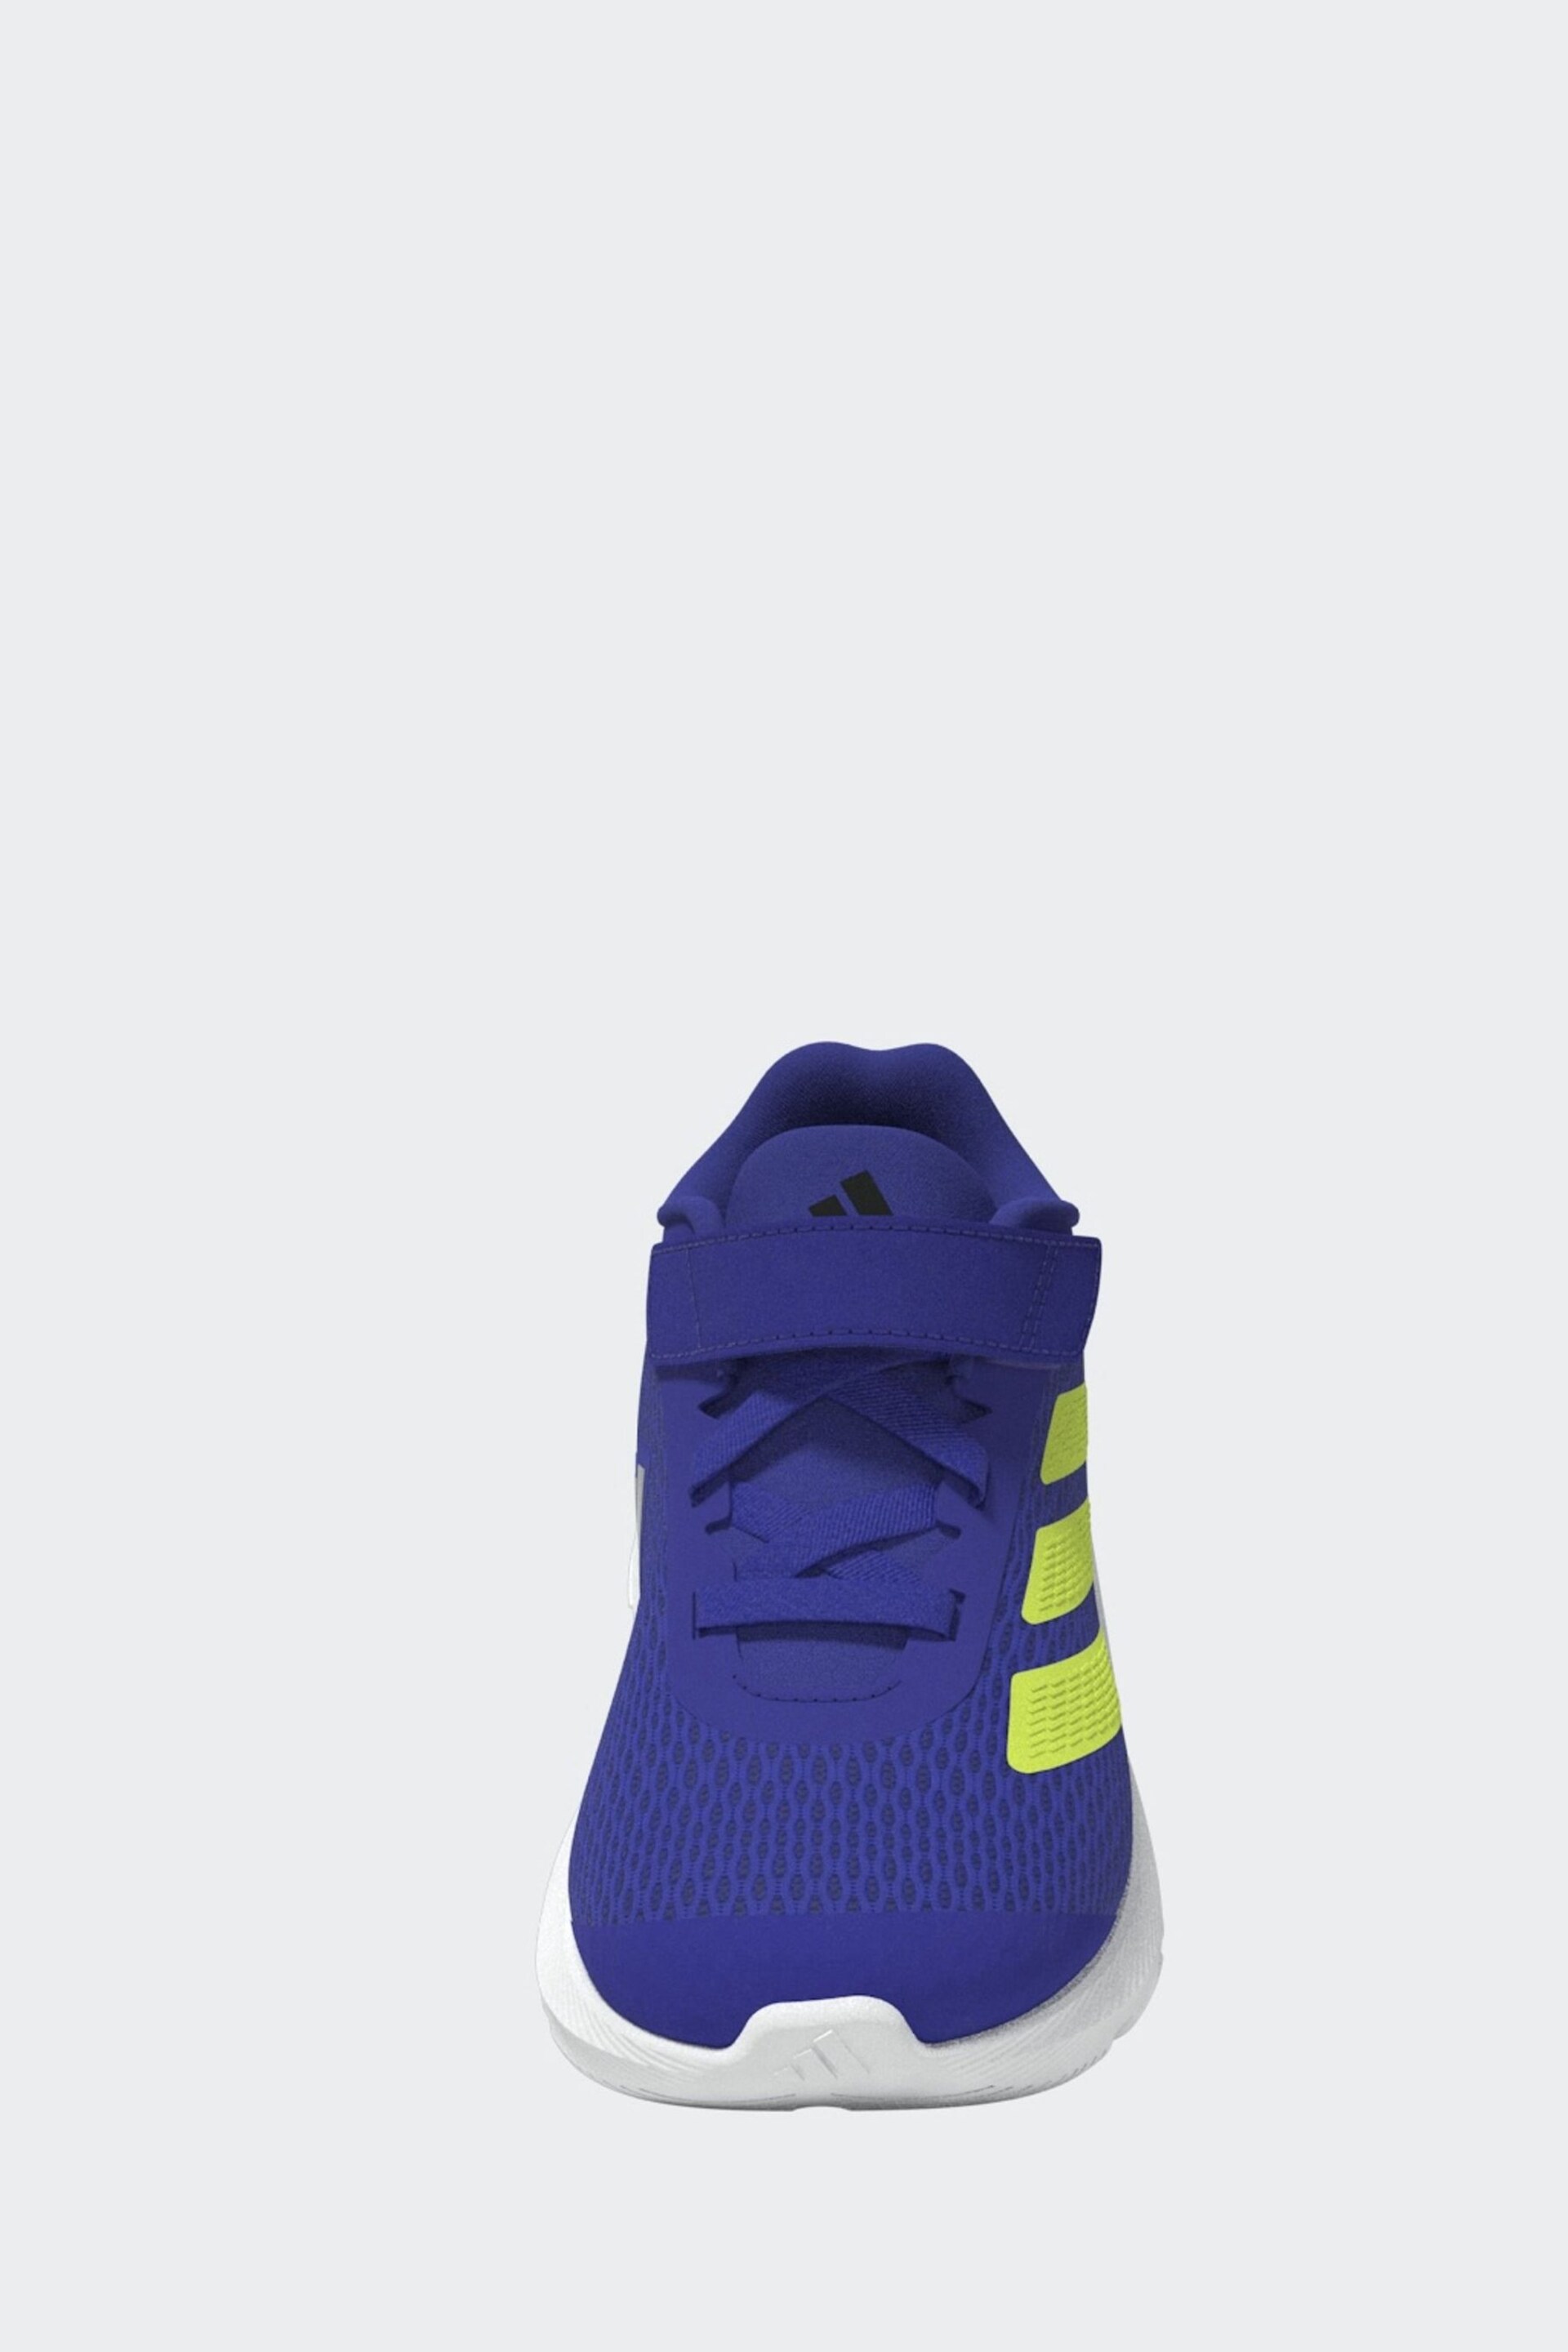 adidas Blue Duramo Trainers - Image 10 of 18